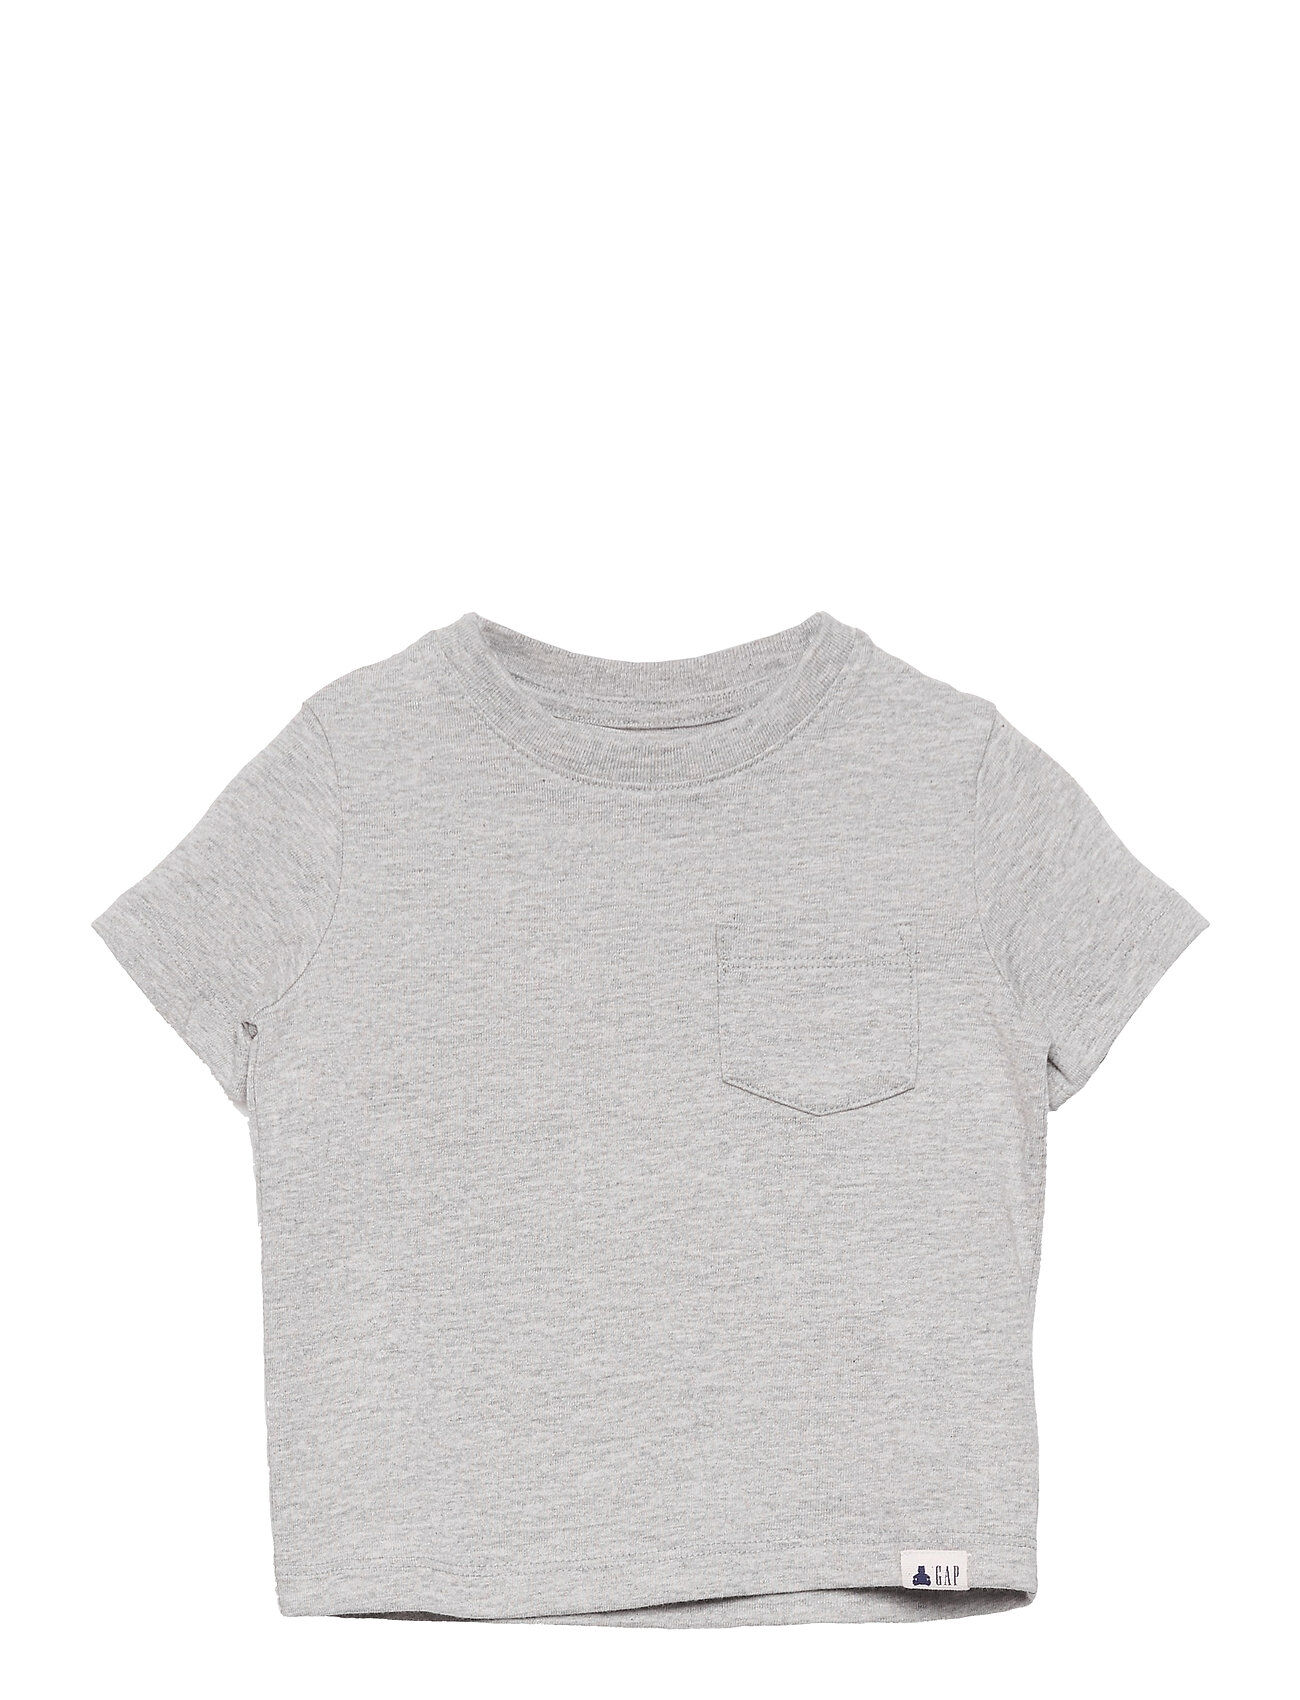 GAP Toddler 100% Organic Cotton Mix And Match T-Shirt T-shirts Short-sleeved Grå GAP